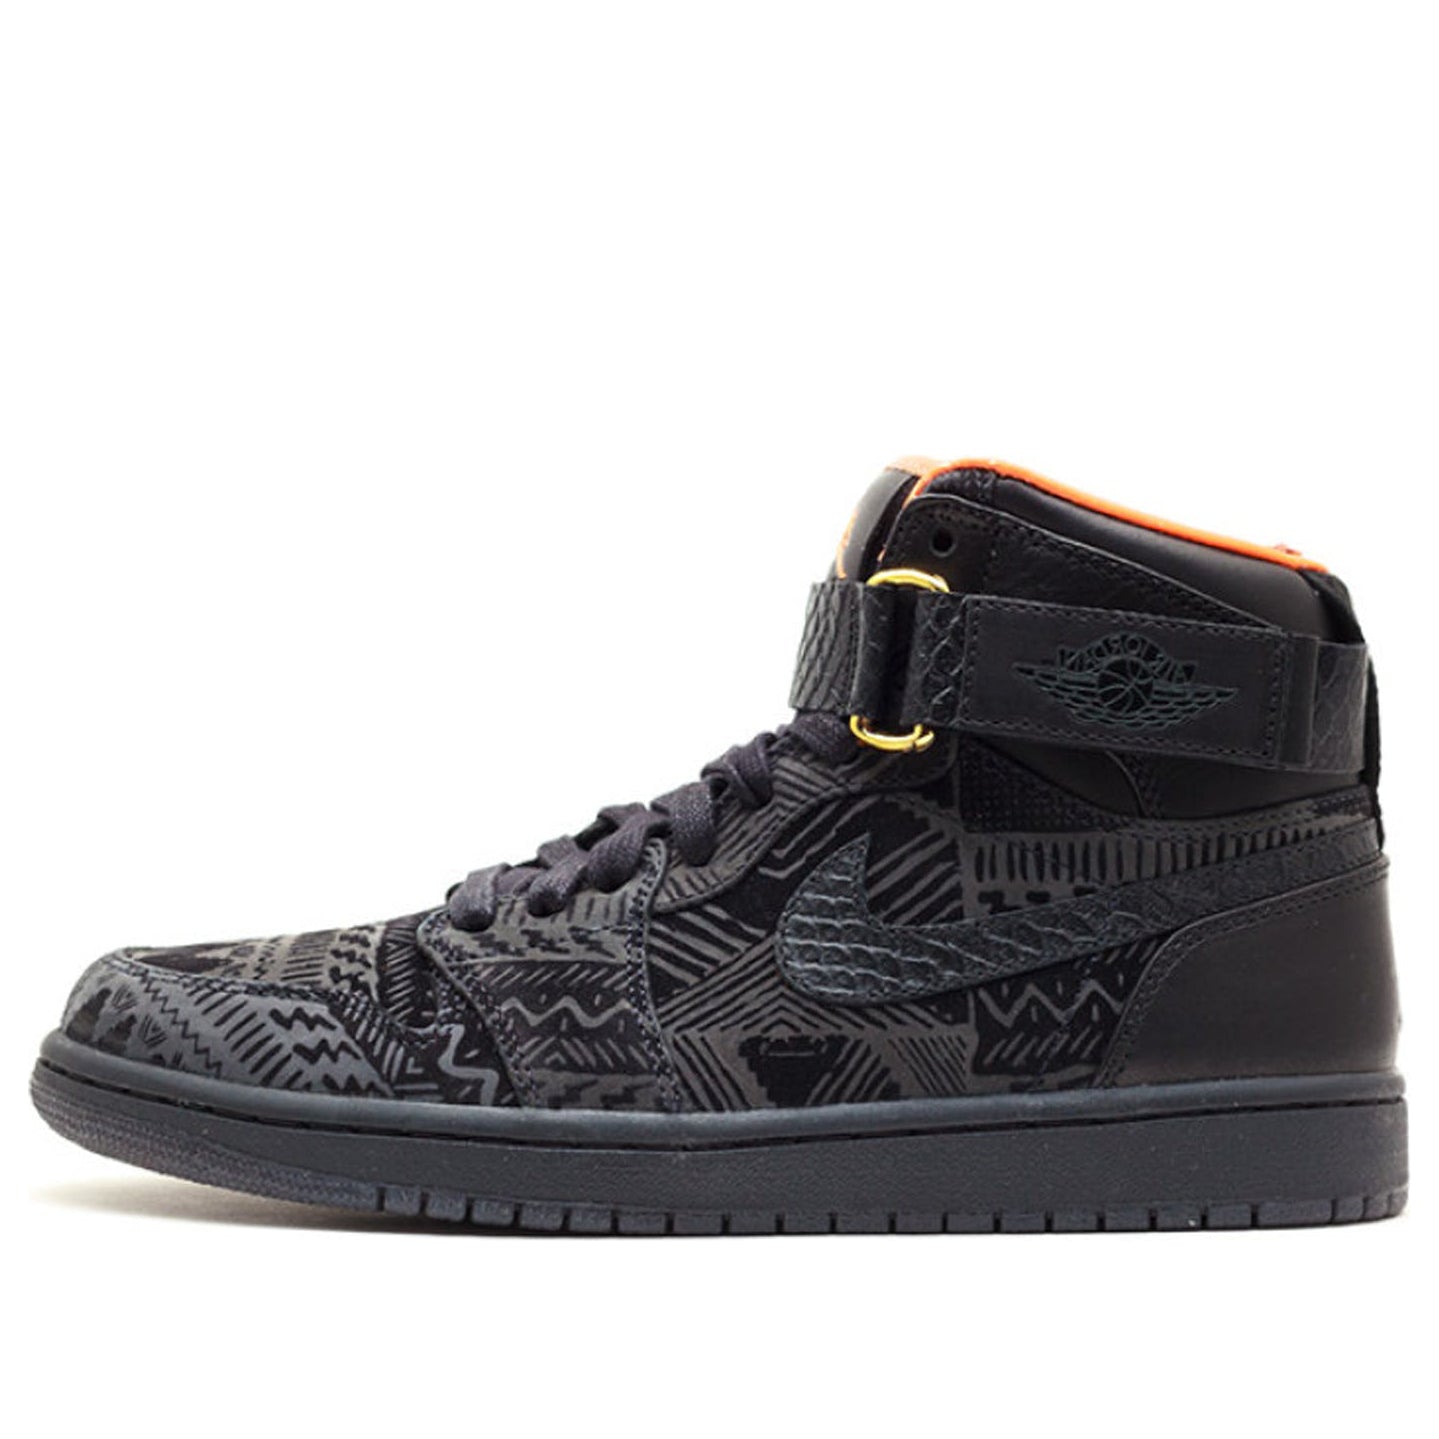 Nike Just Don x Air Jordan 1 High Strap 'BHM' Black/Anthracite-Black 398178-178